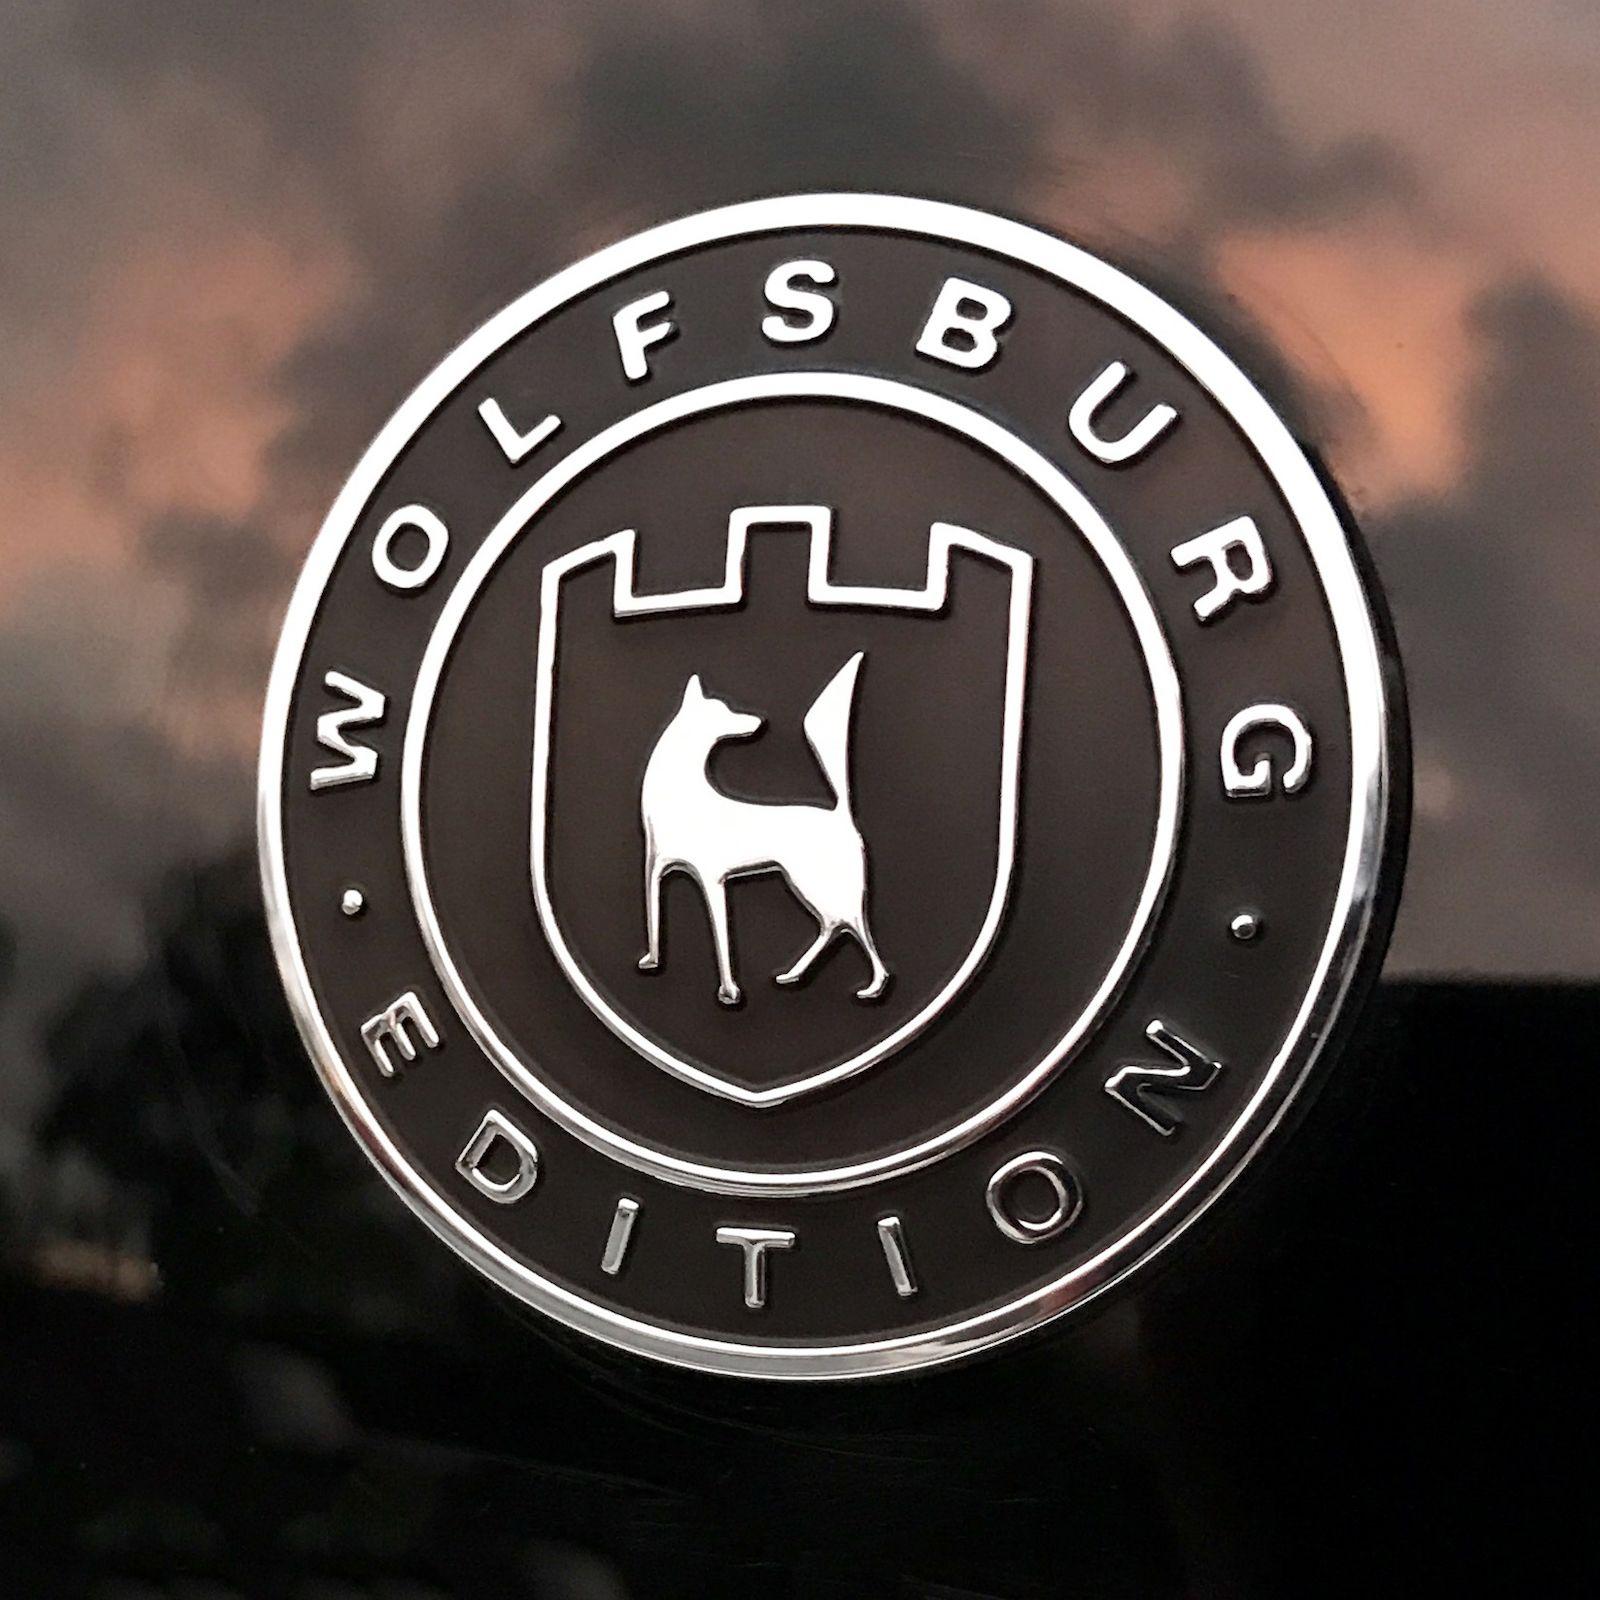 Wolfsburg Edition Logo - Duke's Drive: 2017 VW Touareg V6 Wolfsburg Edition Review